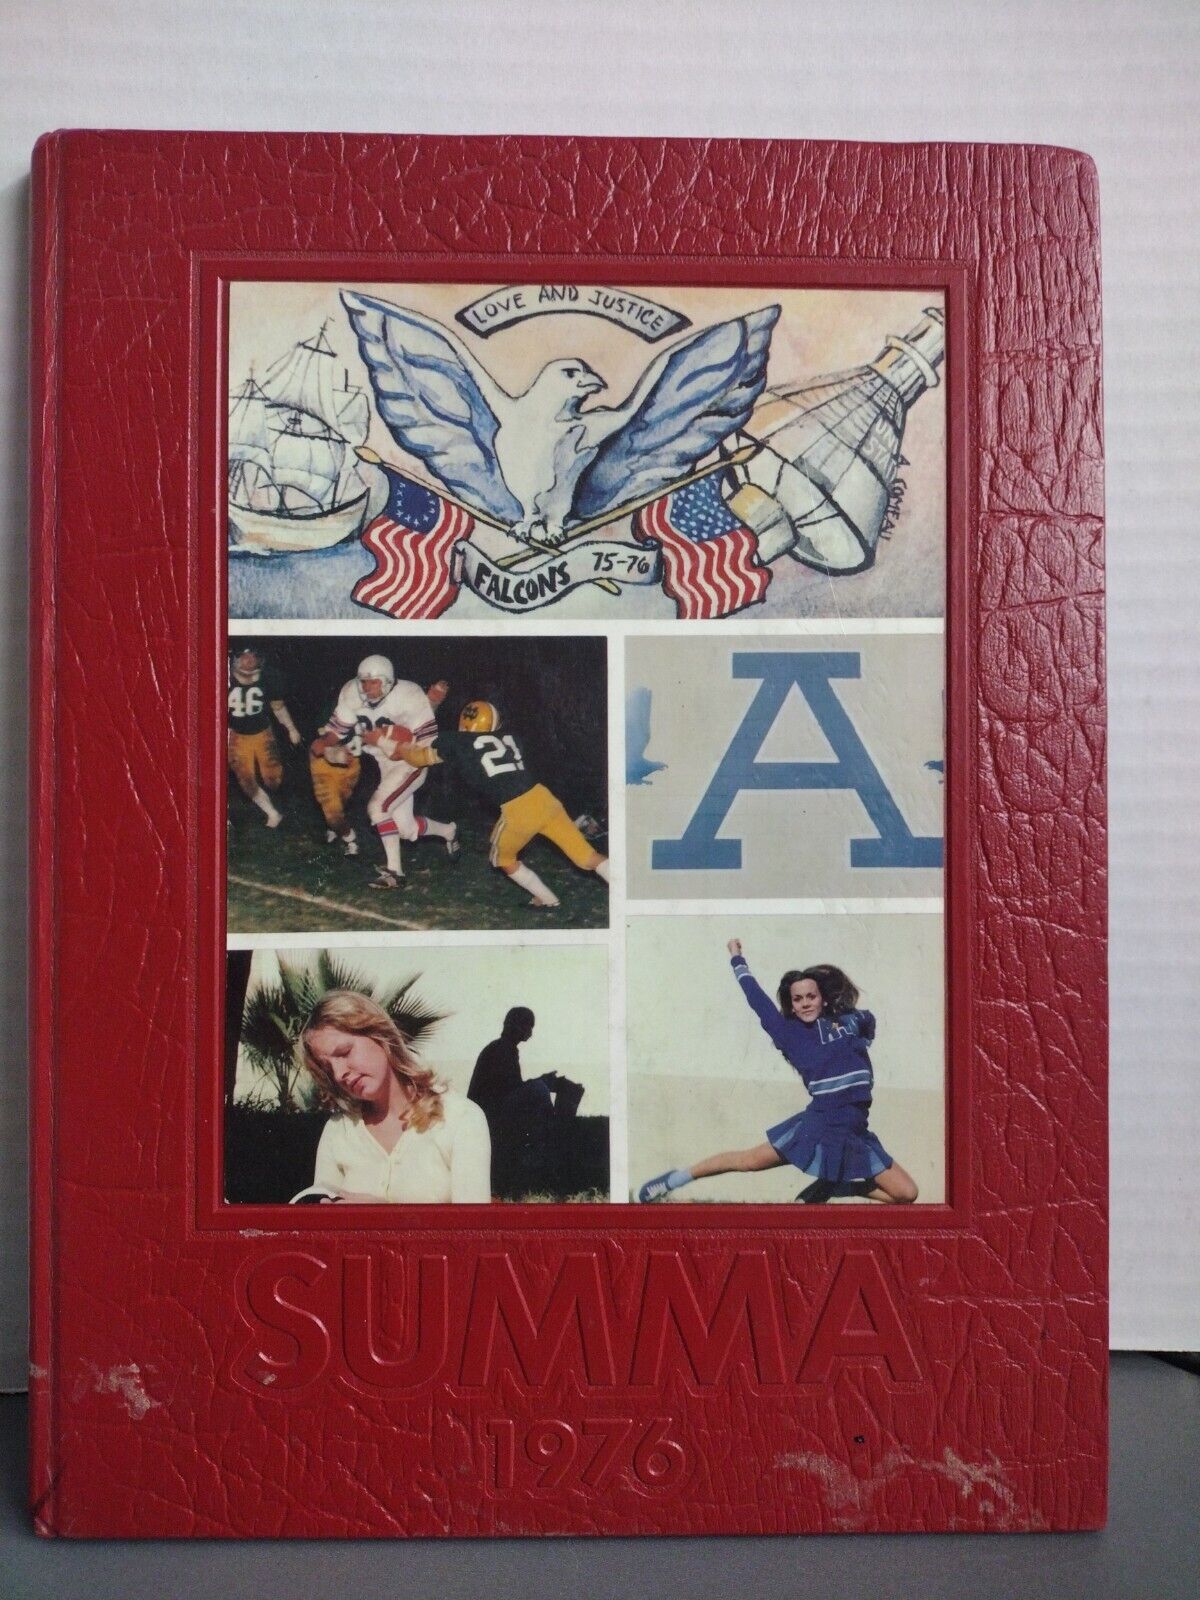 Aquinas High School Yearbook 1976 Summa San Bernardino